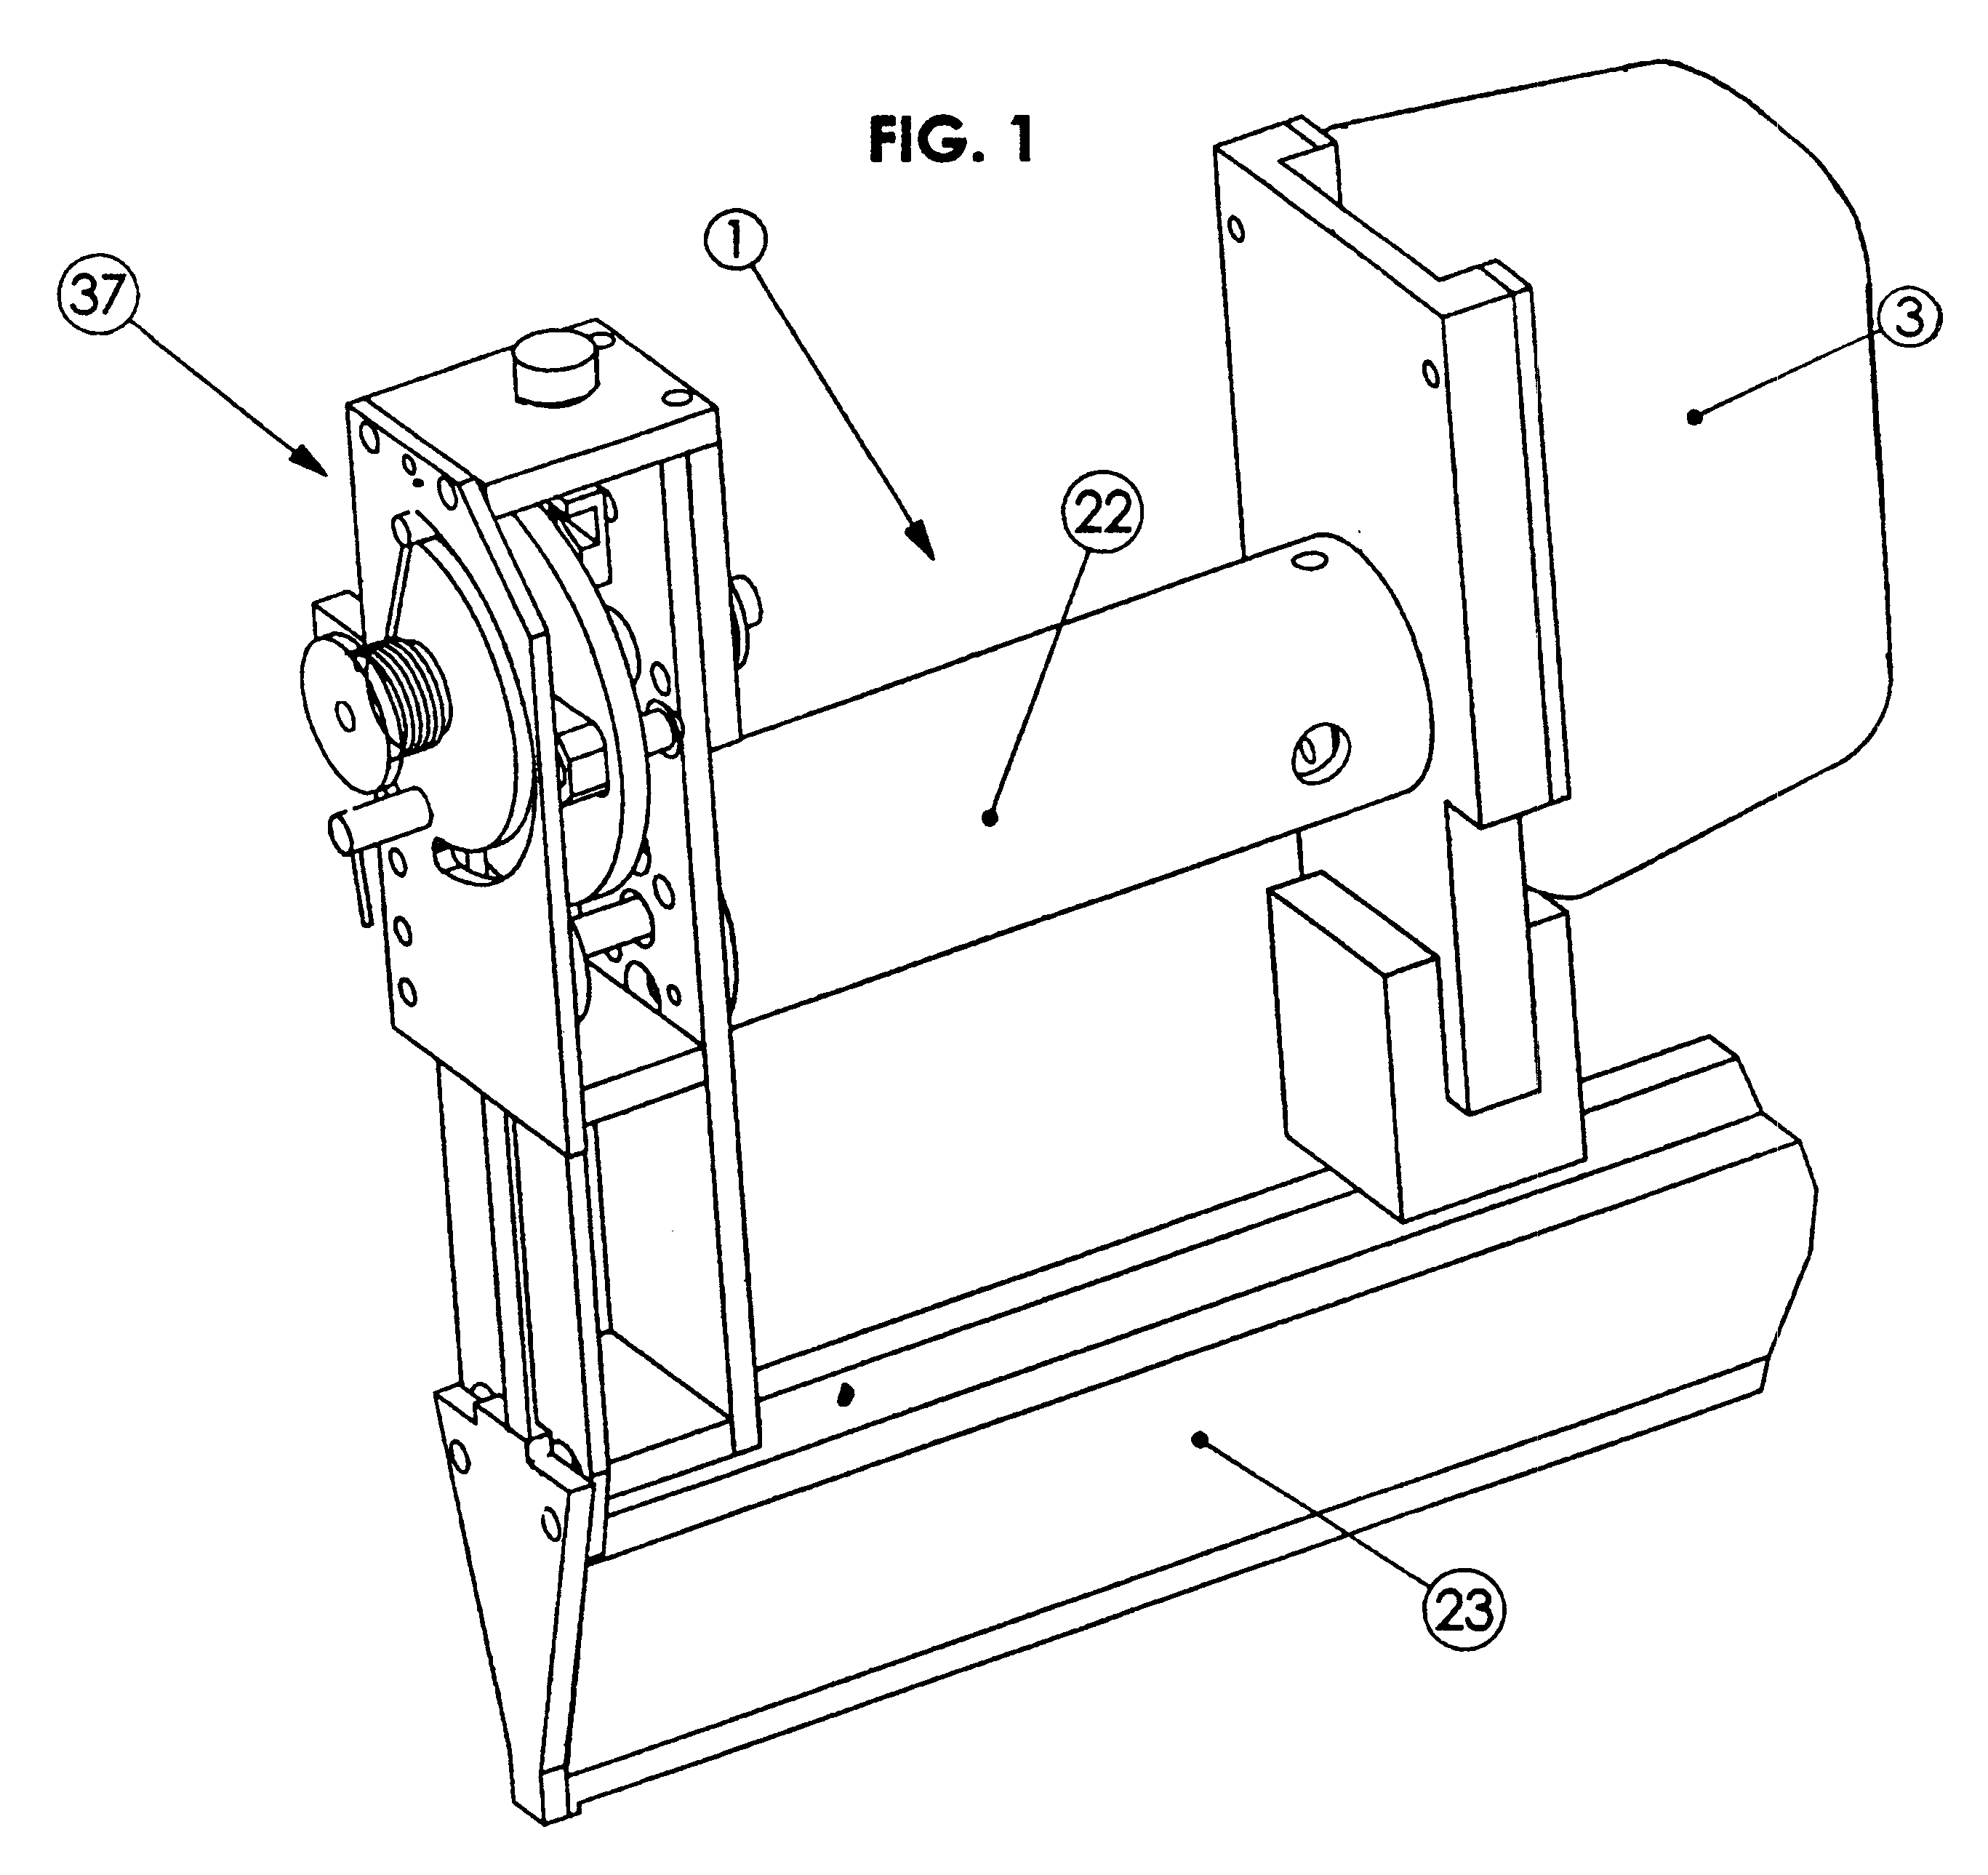 Electrical motor driven nail gun